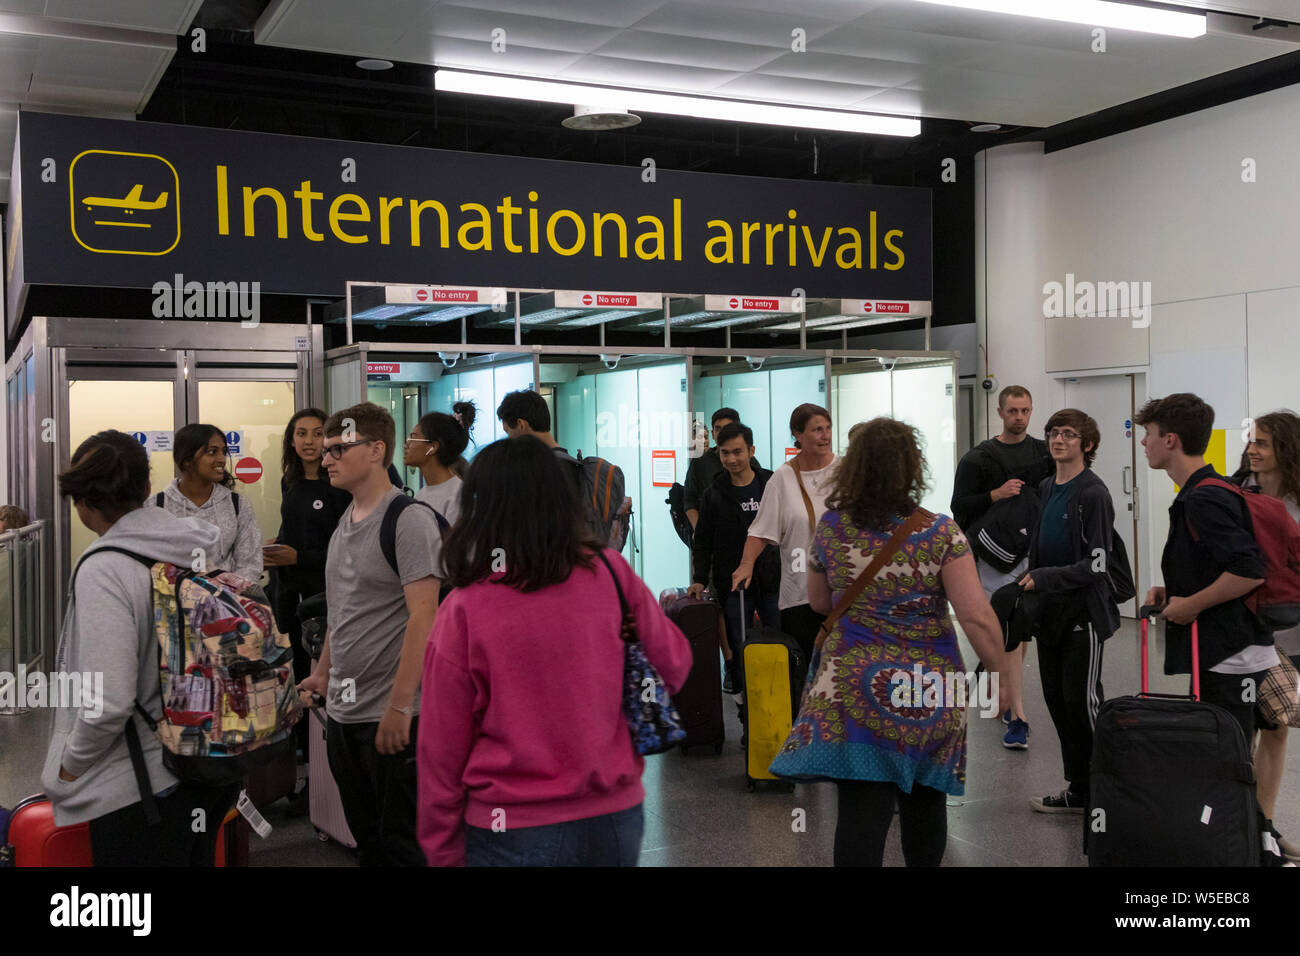 International arrivals at Gatwick airport north terminal, gatwick, uk Stock Photo